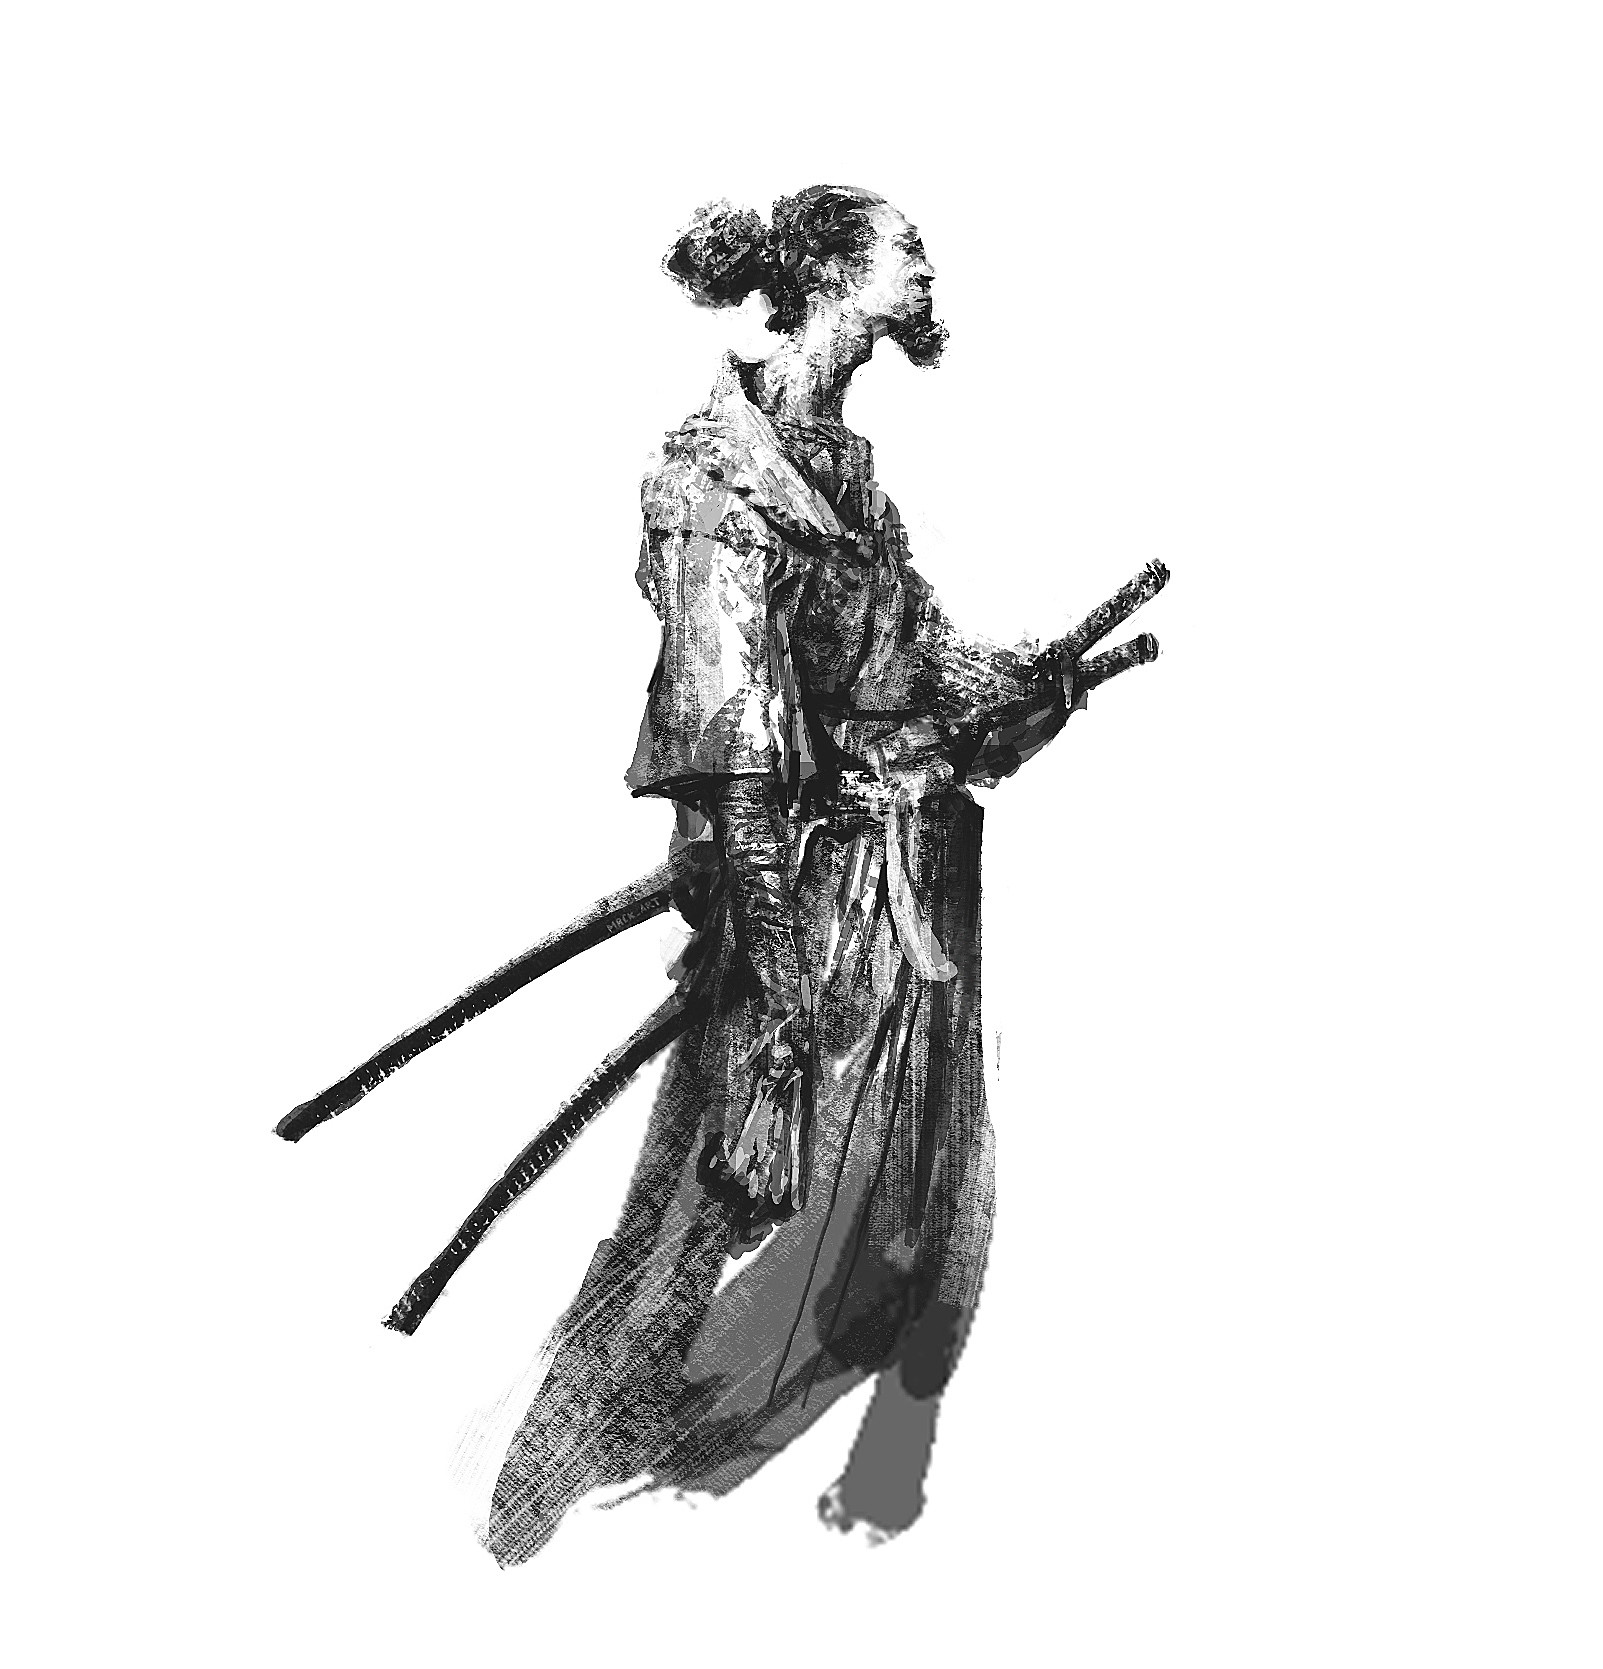 Marck Yulo - Way of the samurai